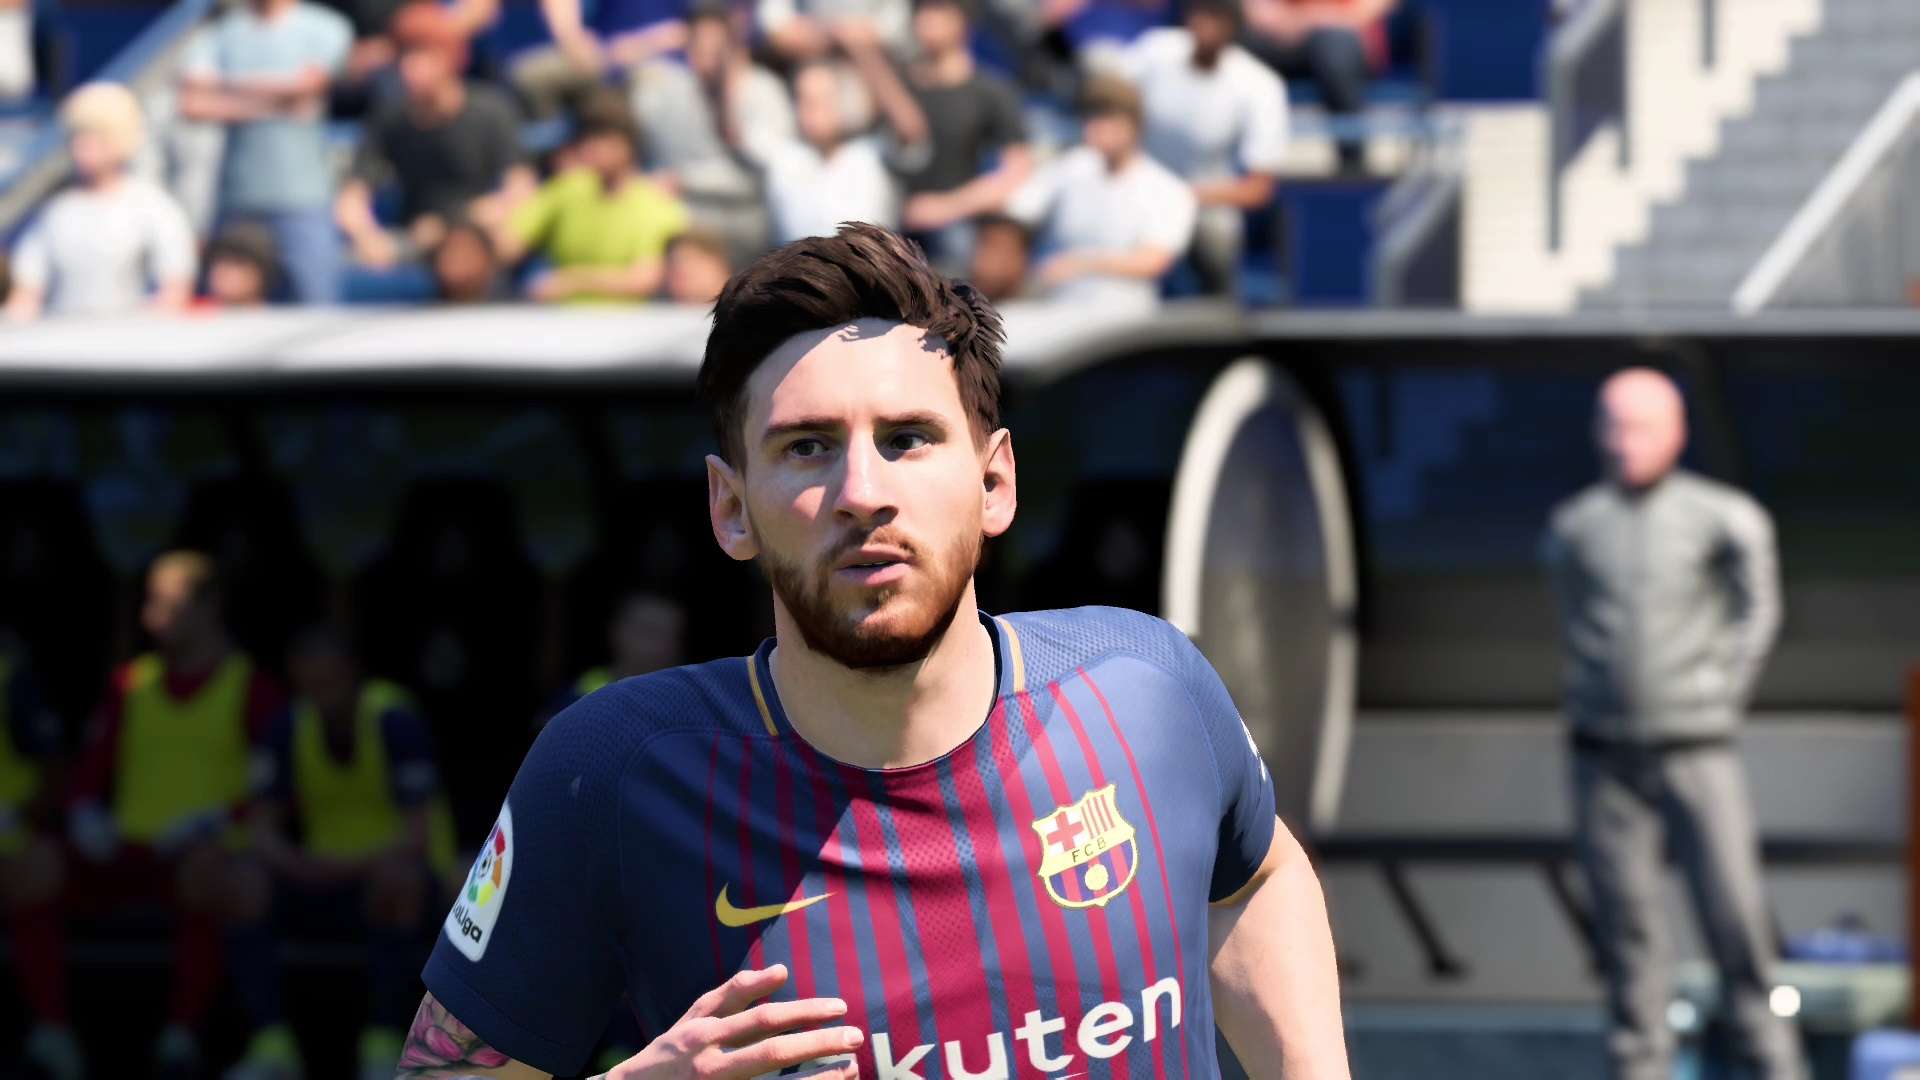 FIFA 18 Messi